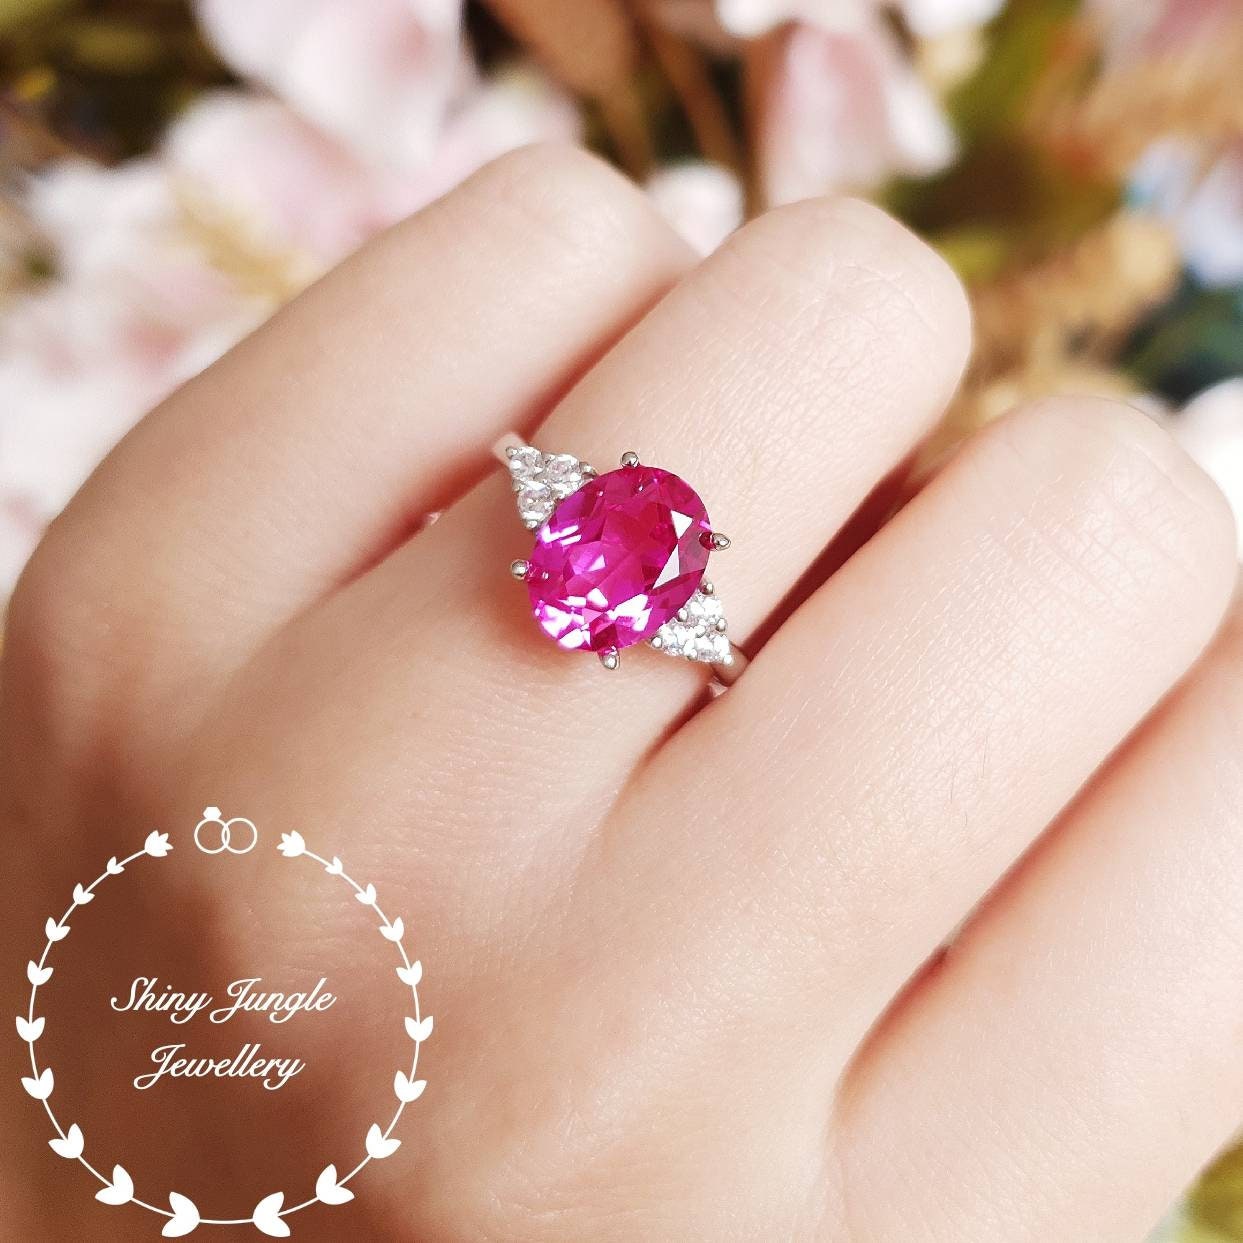 Platinum Channel Set 3 Three Stone Diamond Engagement Ring with a 3 Carat  Pink Sapphire Heirloom Quality Center | Amazon.com